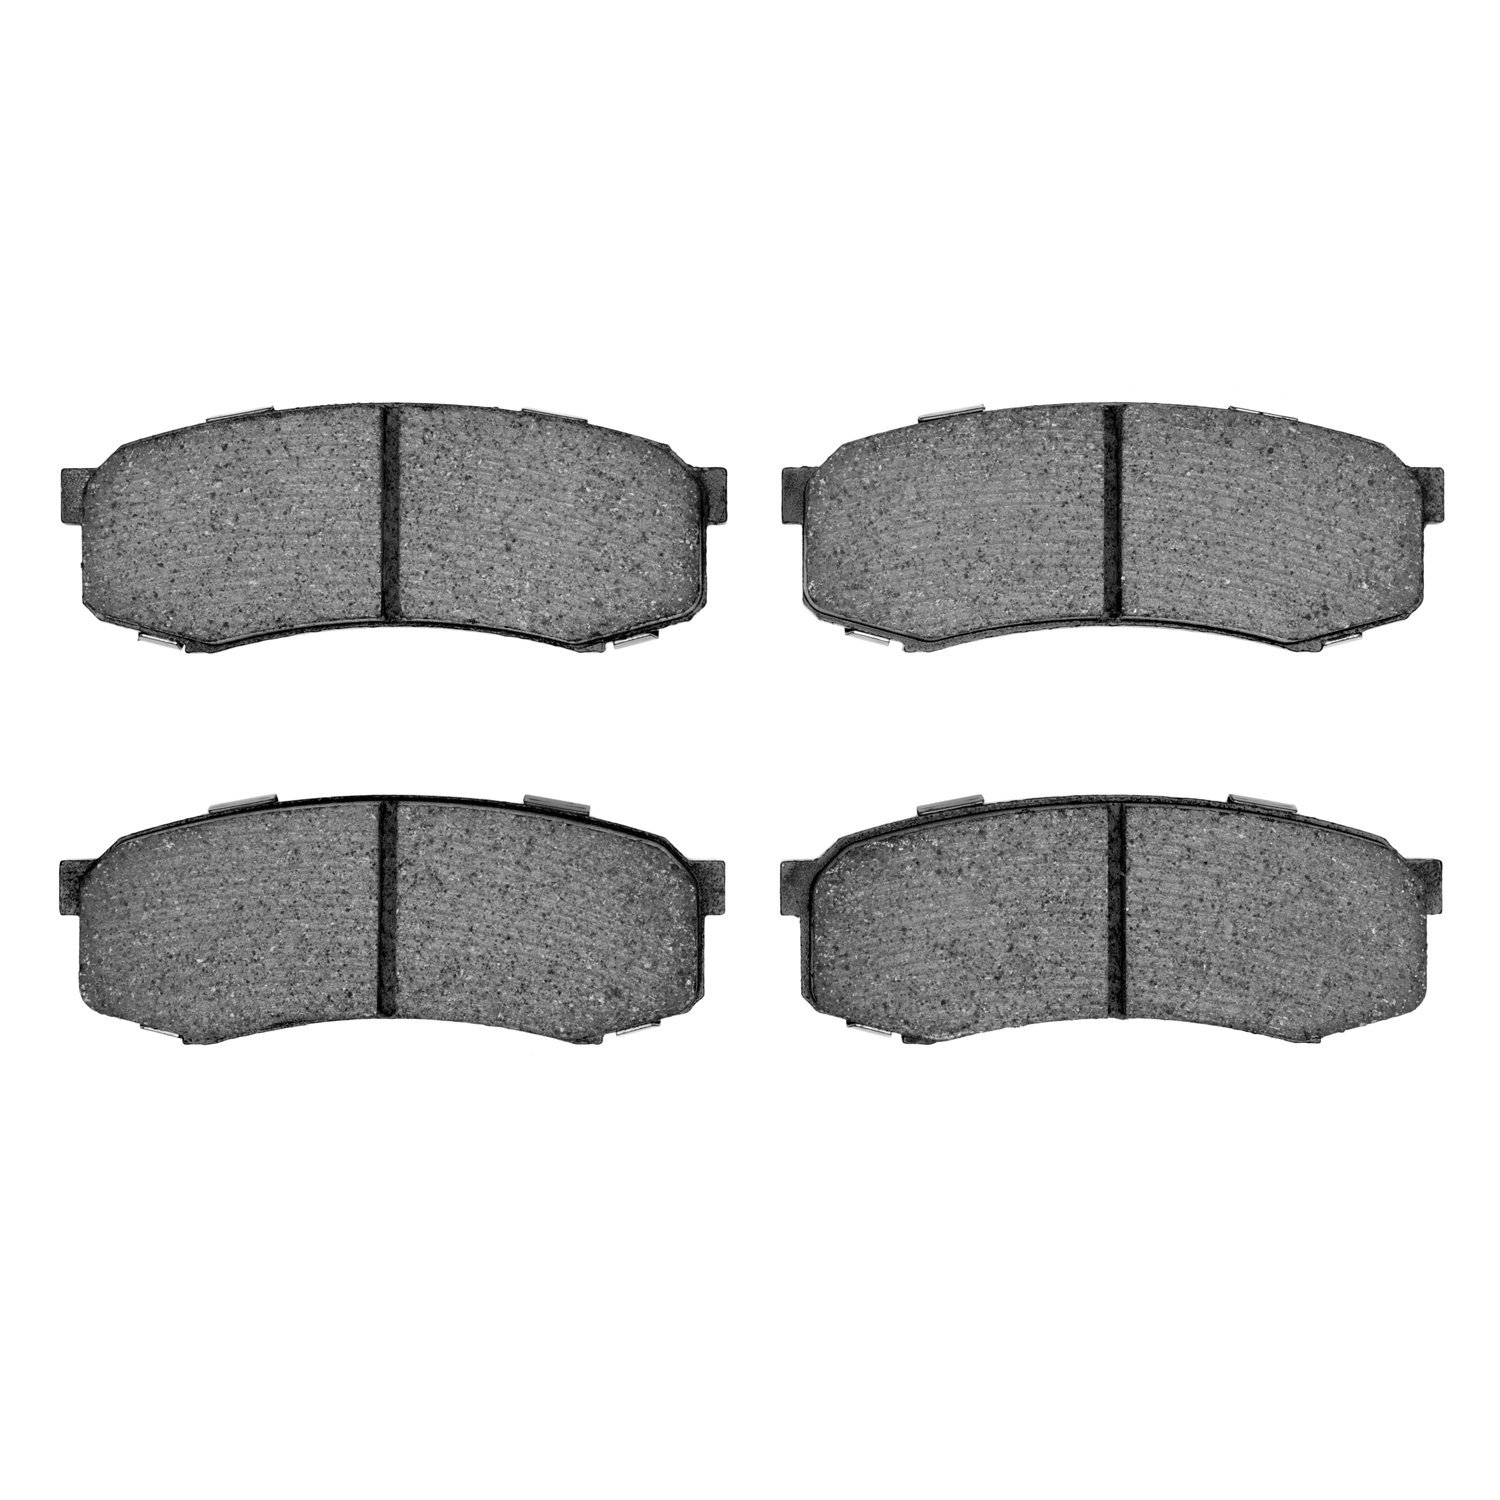 1400-0606-00 Ultimate-Duty Brake Pads Kit, Fits Select Multiple Makes/Models, Position: Rear